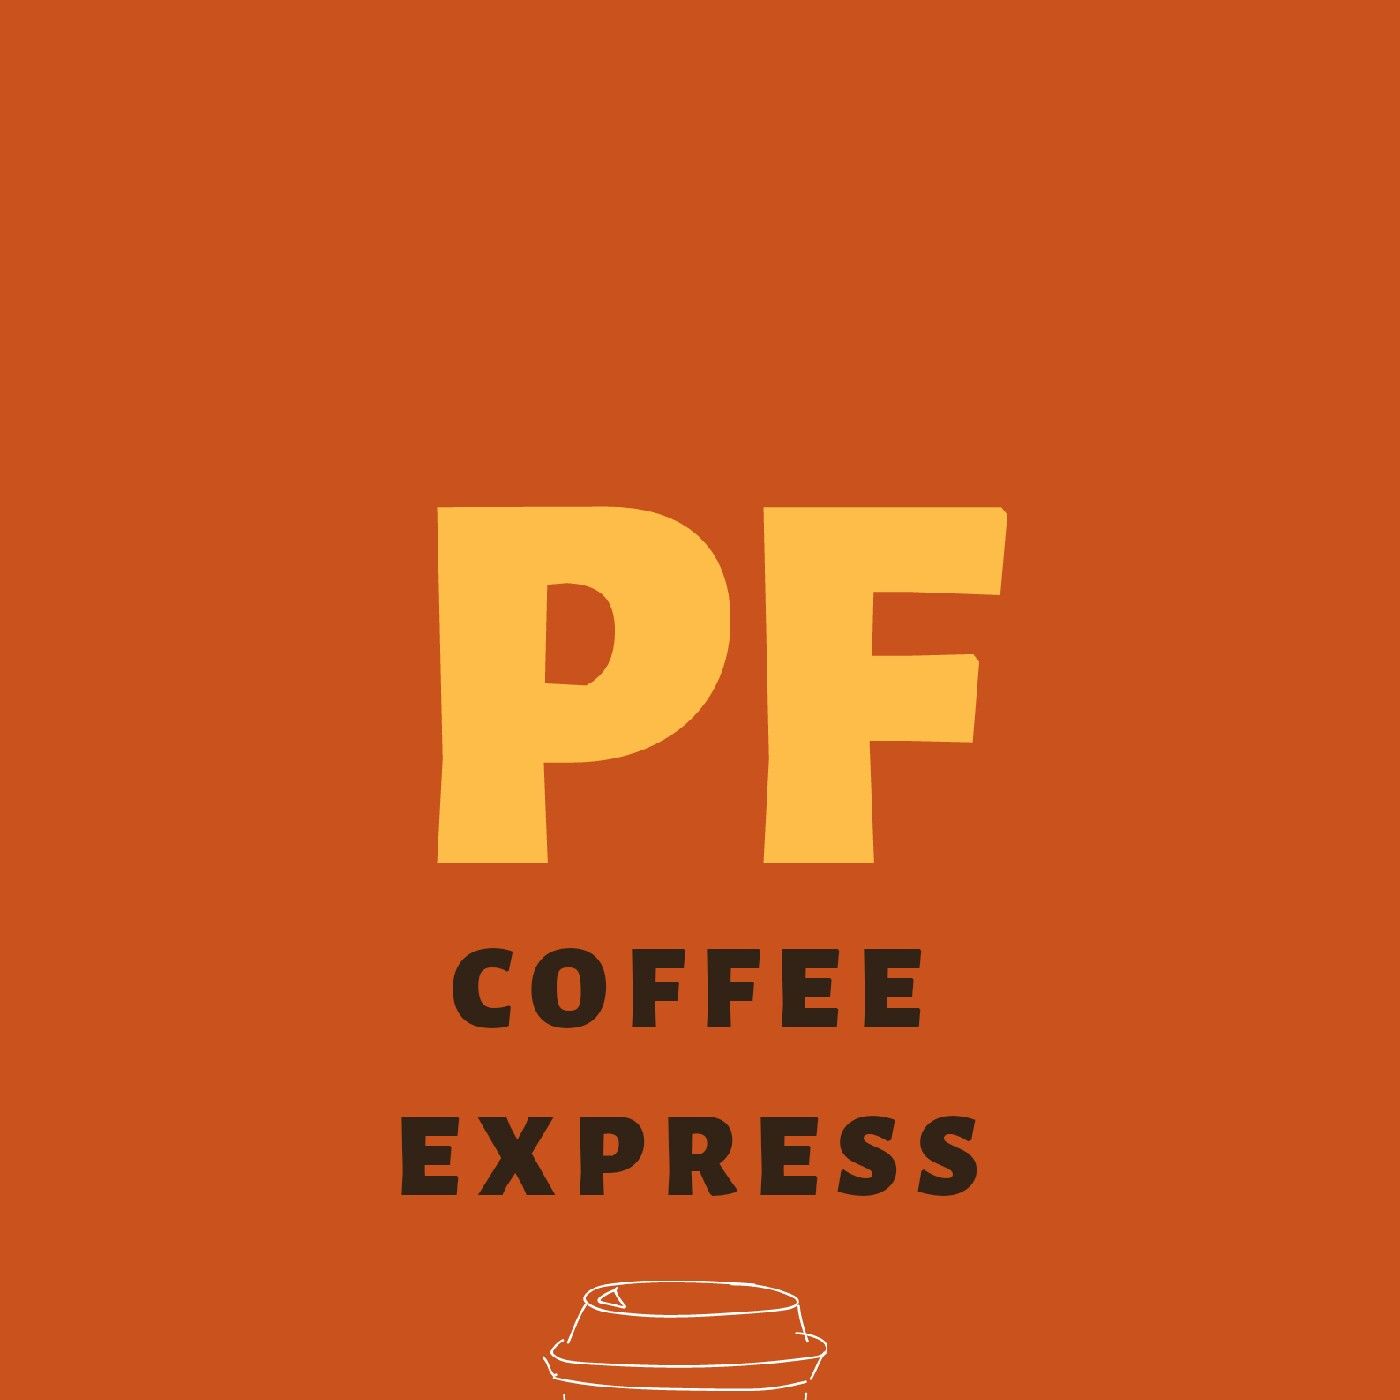 Primera Fila Coffee Express